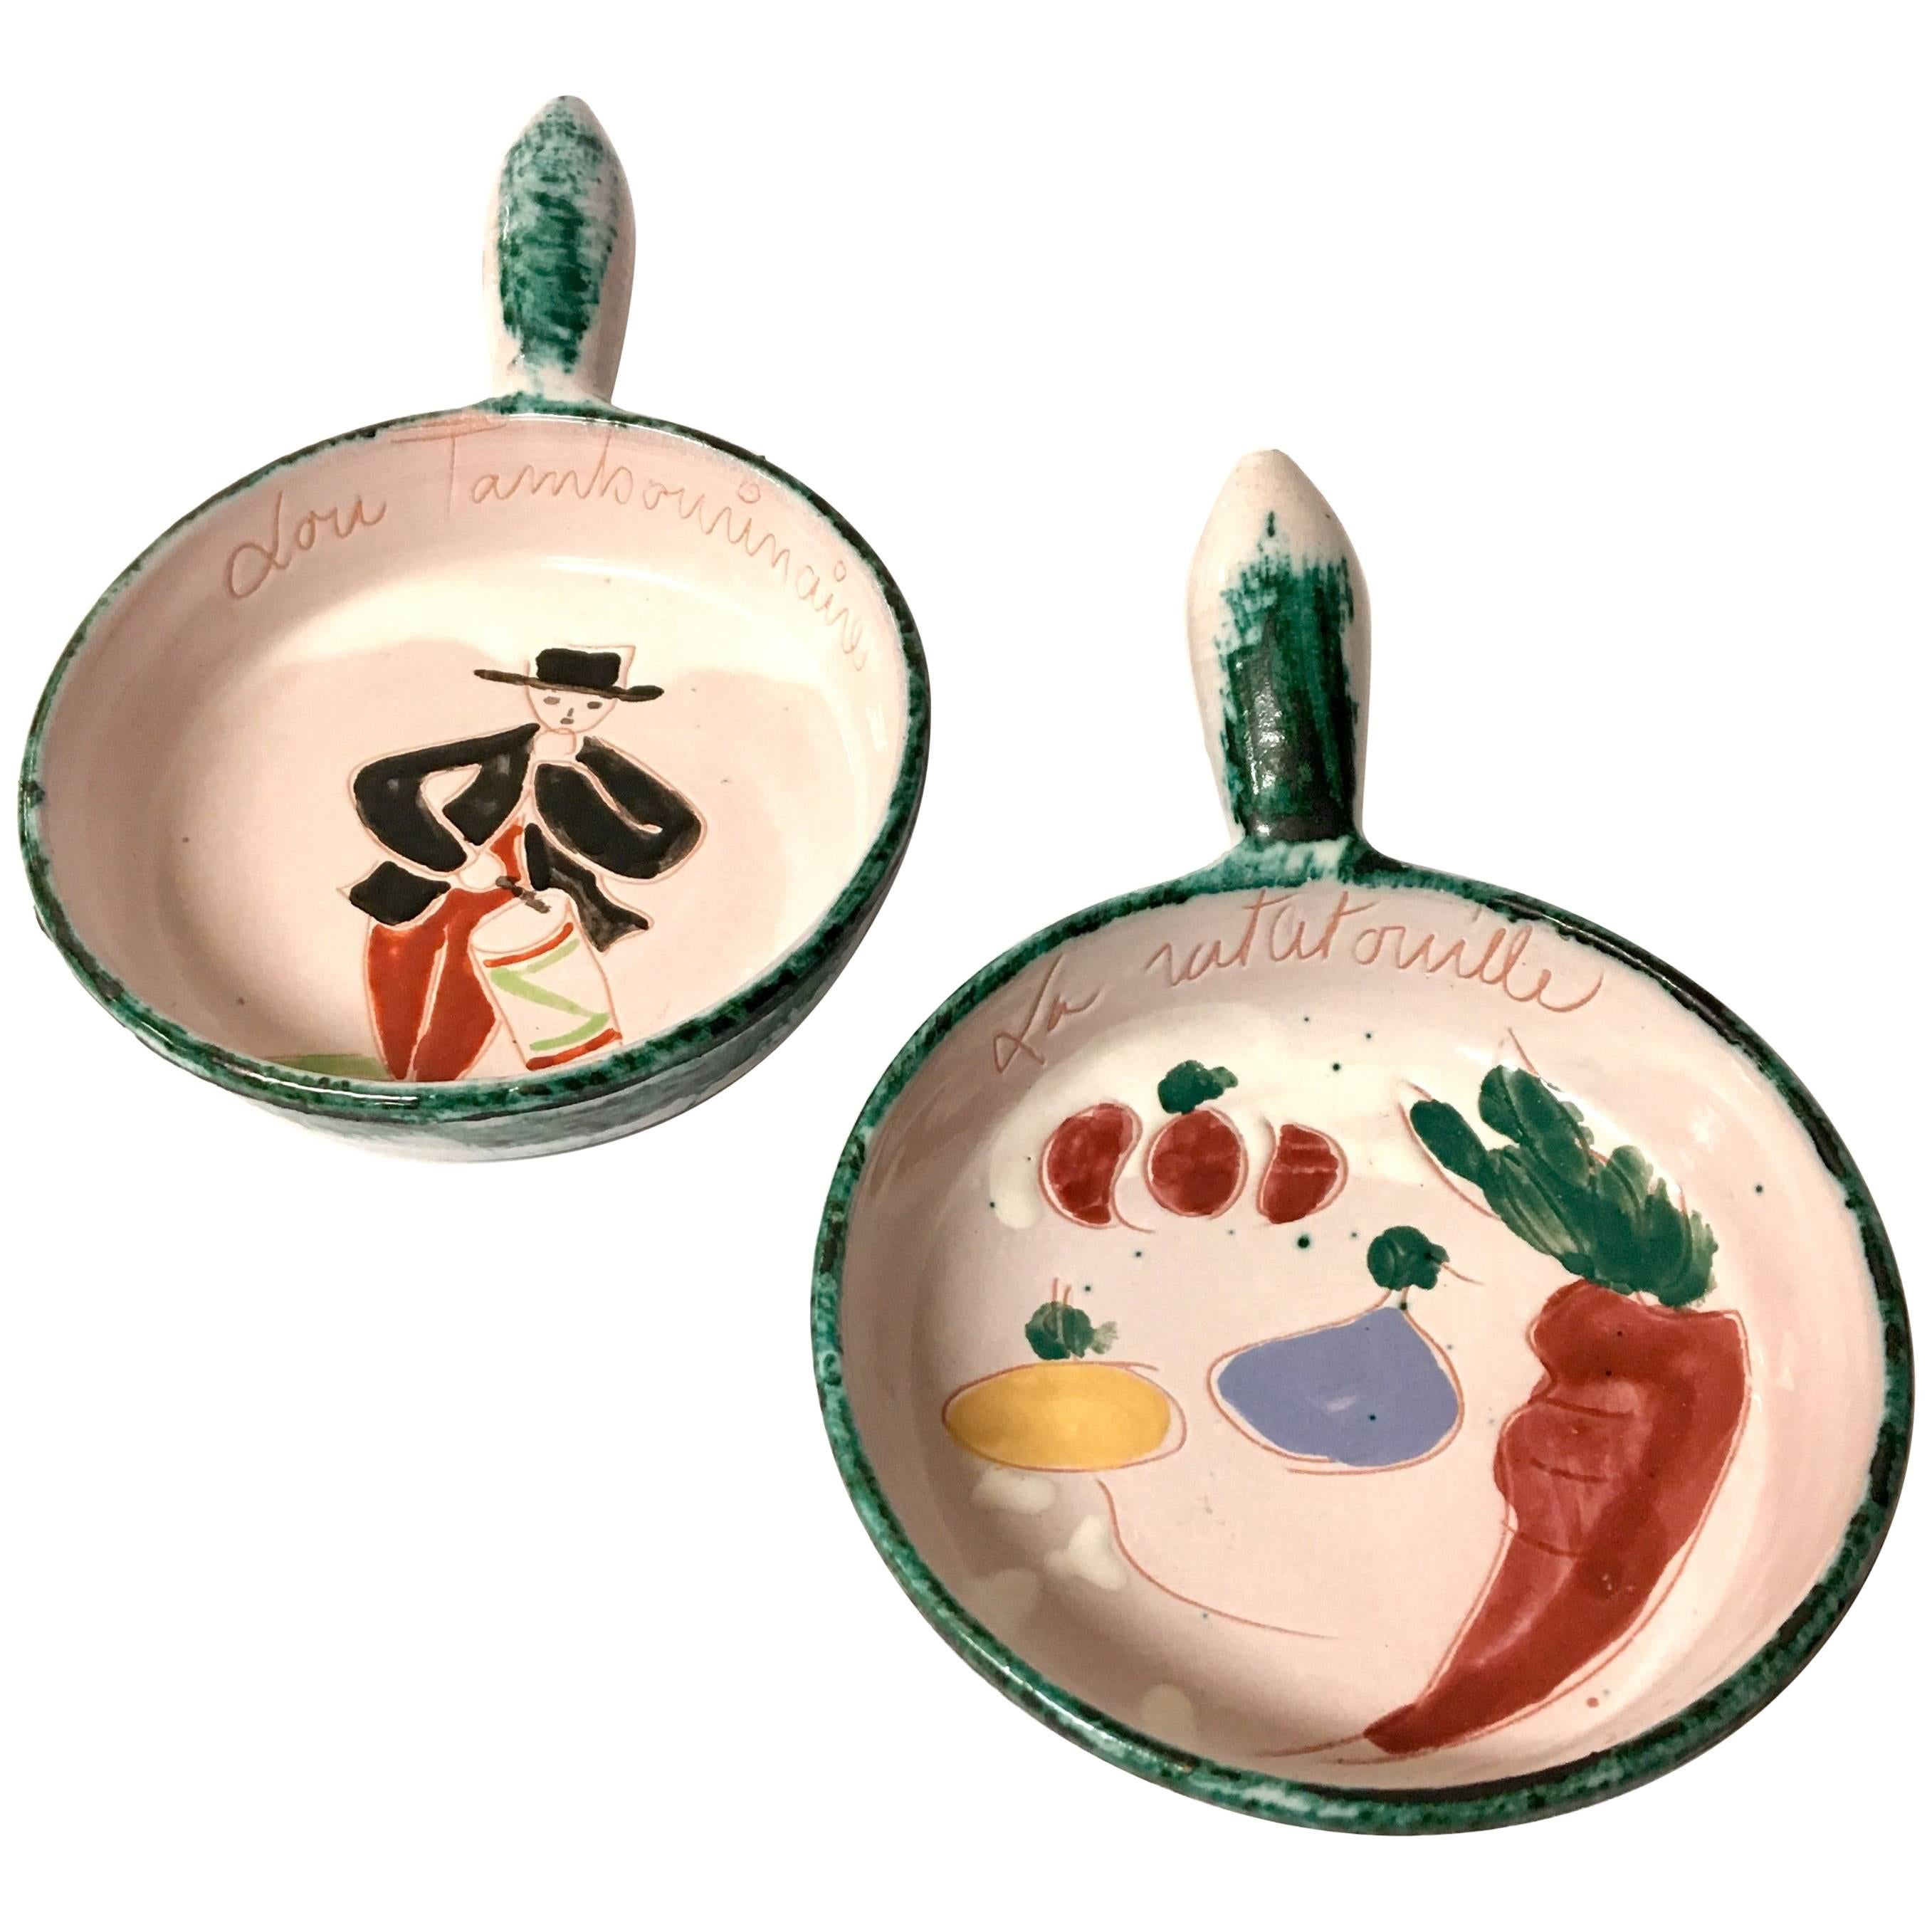 Decorative Mini Casserole "Lou Tambourimaine" & "La Ratatouille" Ceramic Plates For Sale